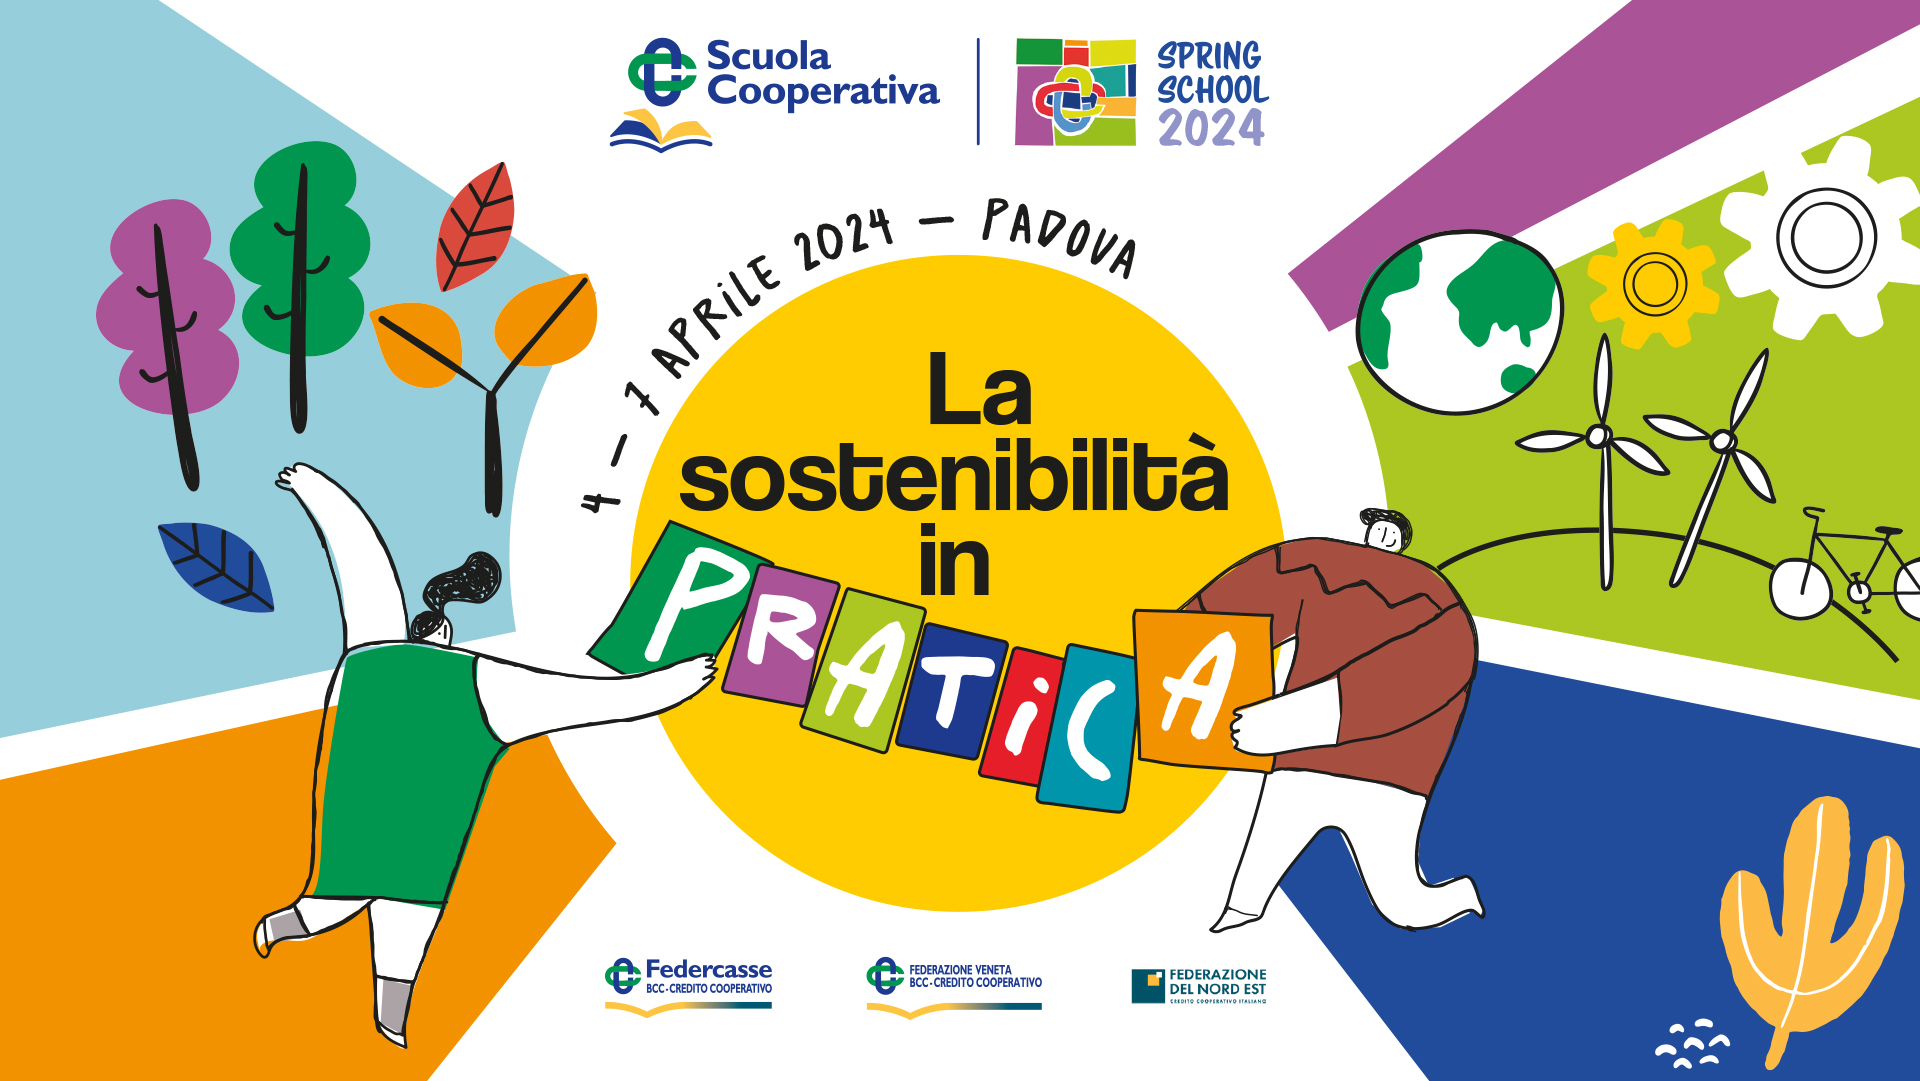 Featured image for “Spring School 2024 dal 4 al 7 aprile a Padova”